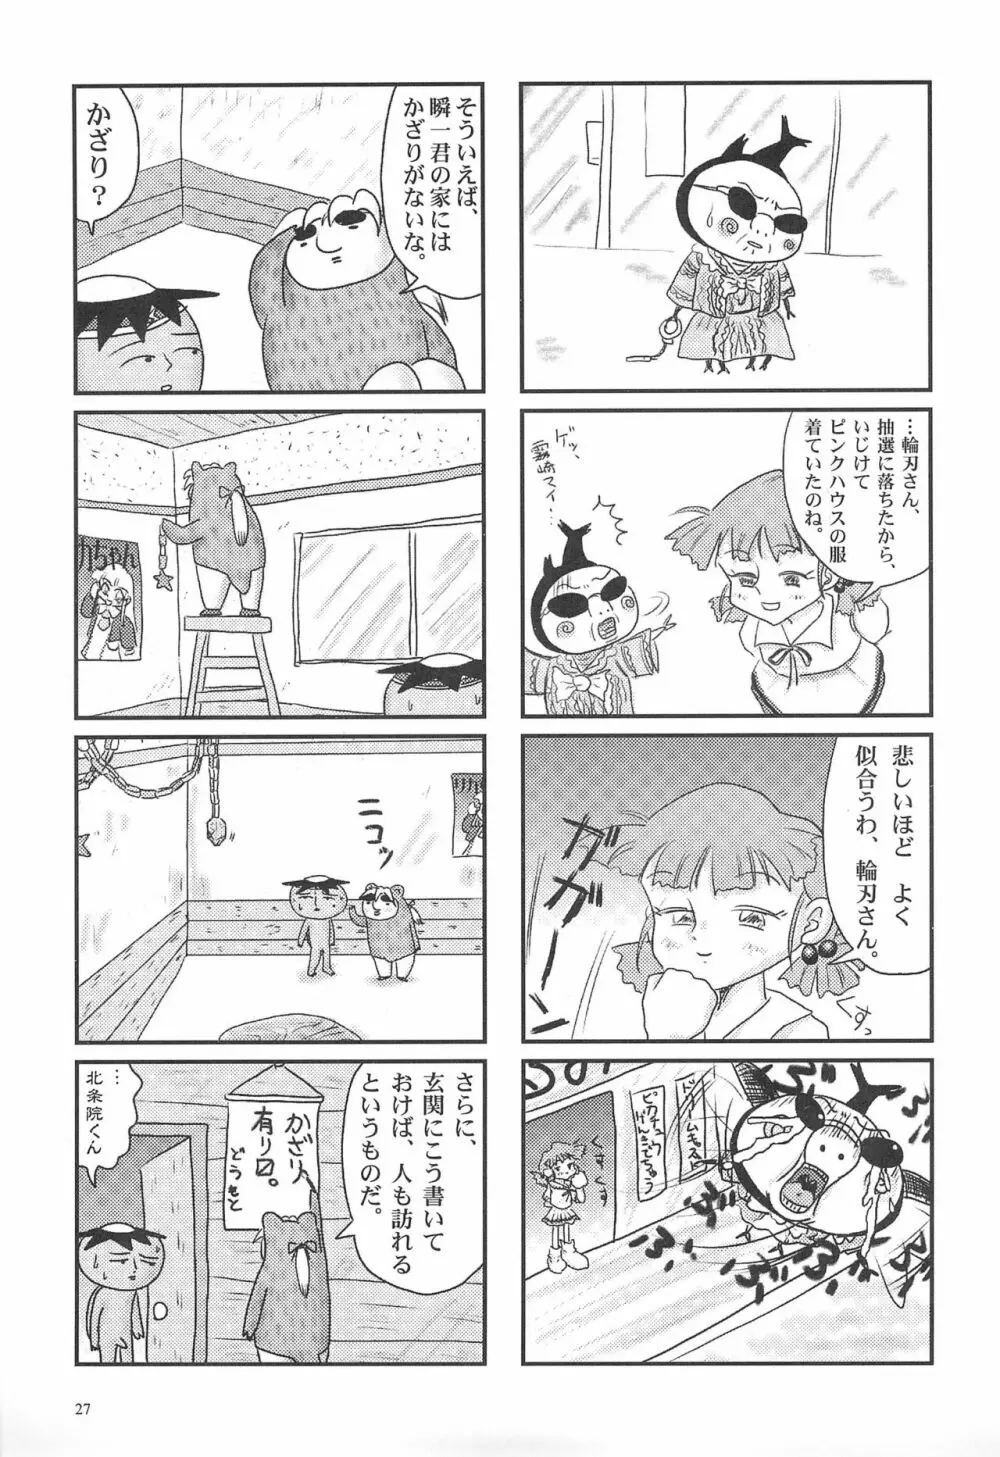 閃虹丸作品集 Vol.1 27ページ